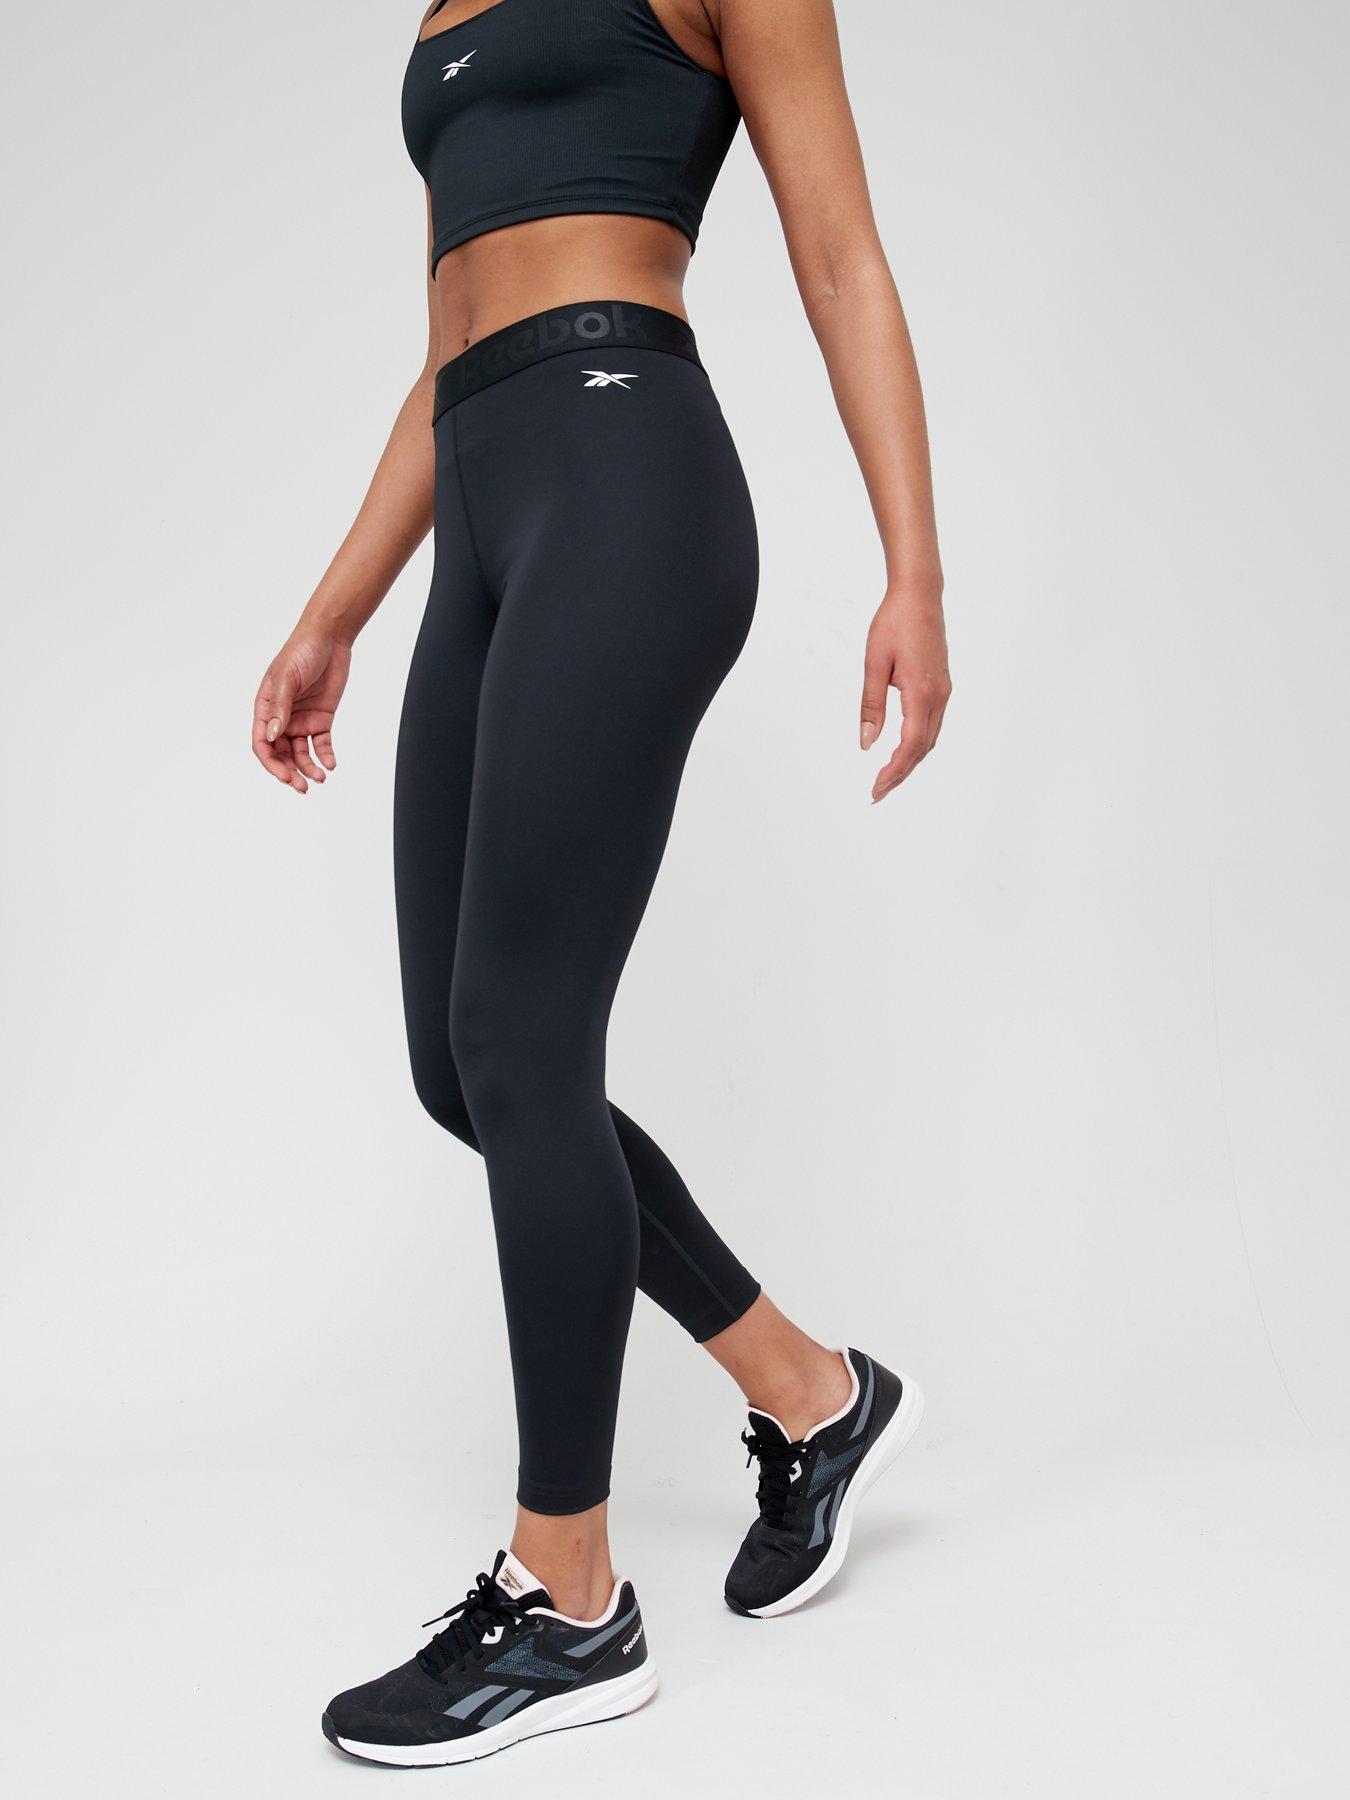 Women's AYBL Sports tights, size 36 (Black) | Emmy